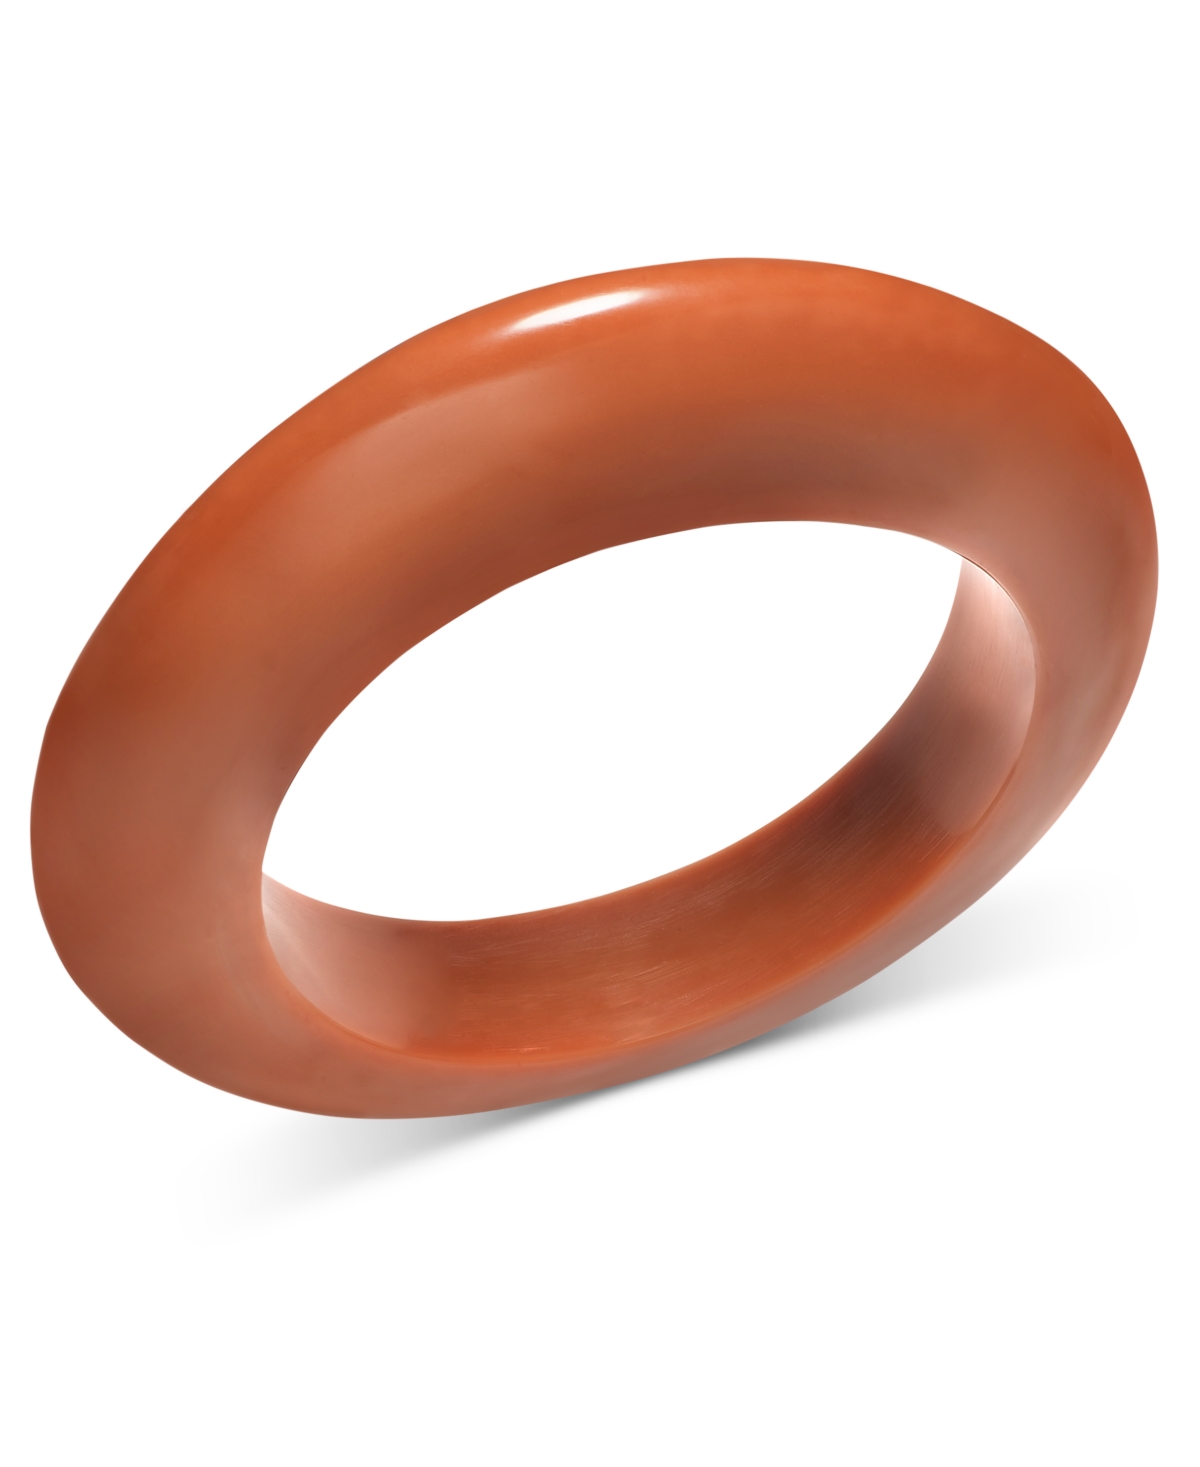 Colored Resin Slip-On Bangle Bracelet - Orange